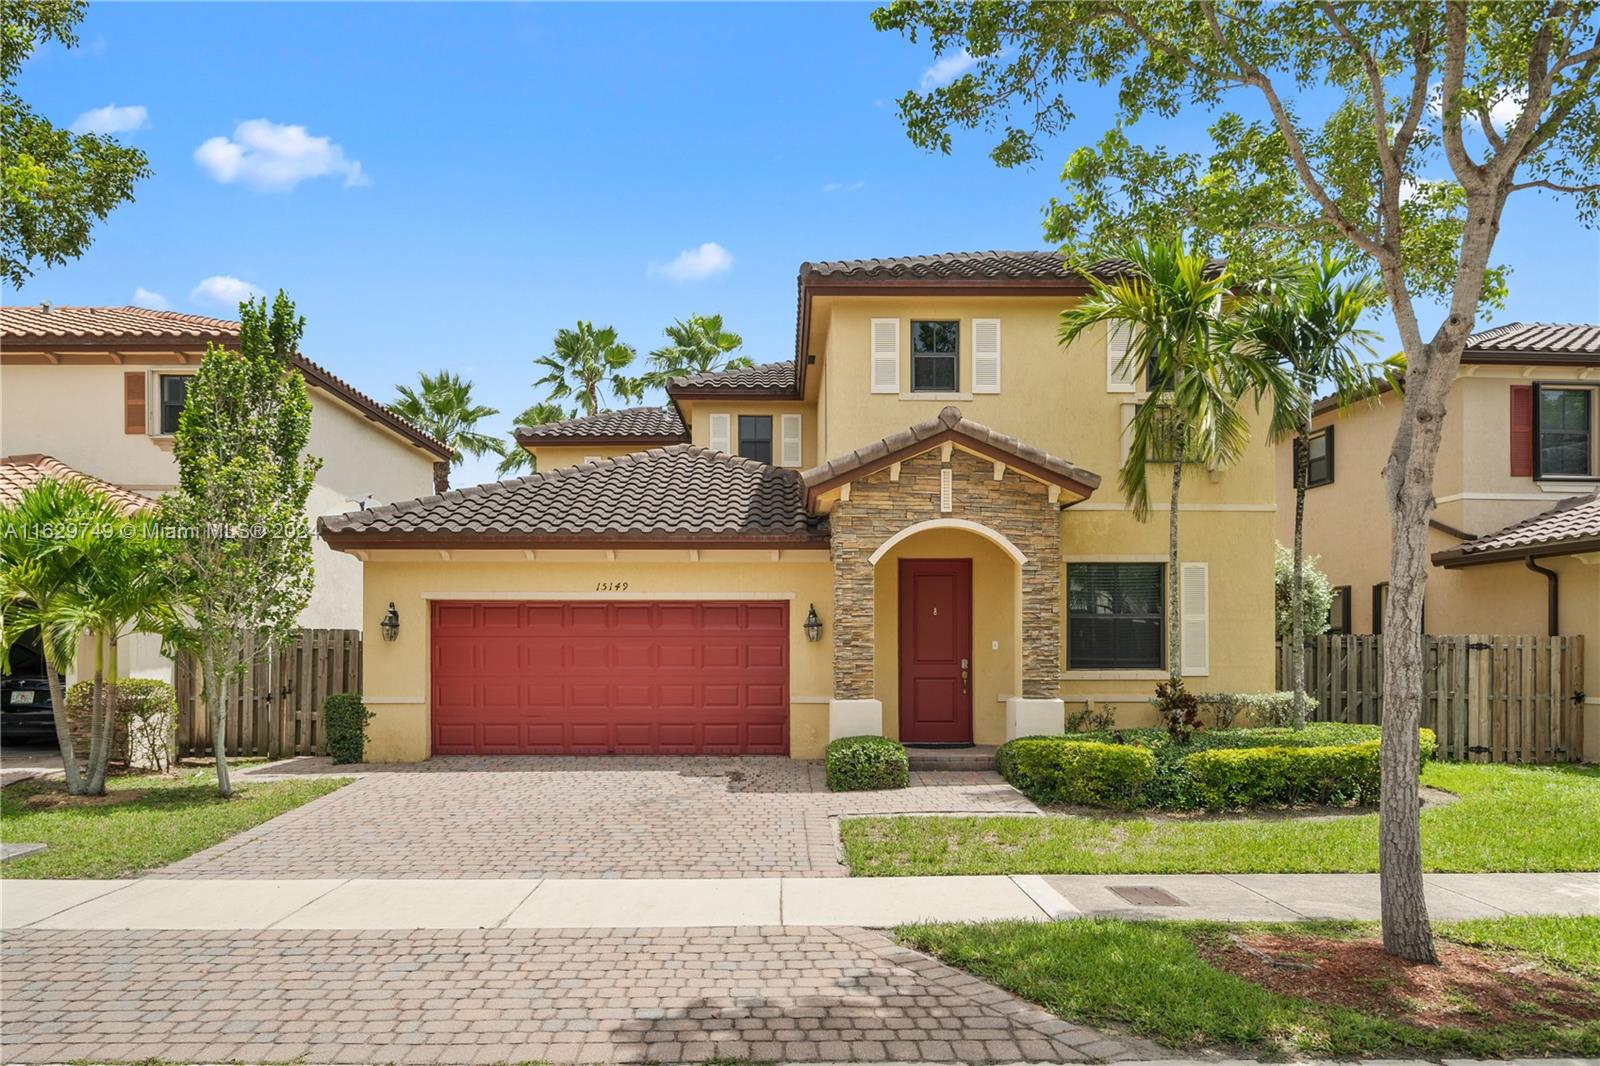 Rental Property at 15149 Sw 113th Ter Ter, Miami, Broward County, Florida - Bedrooms: 4 
Bathrooms: 4  - $4,800 MO.